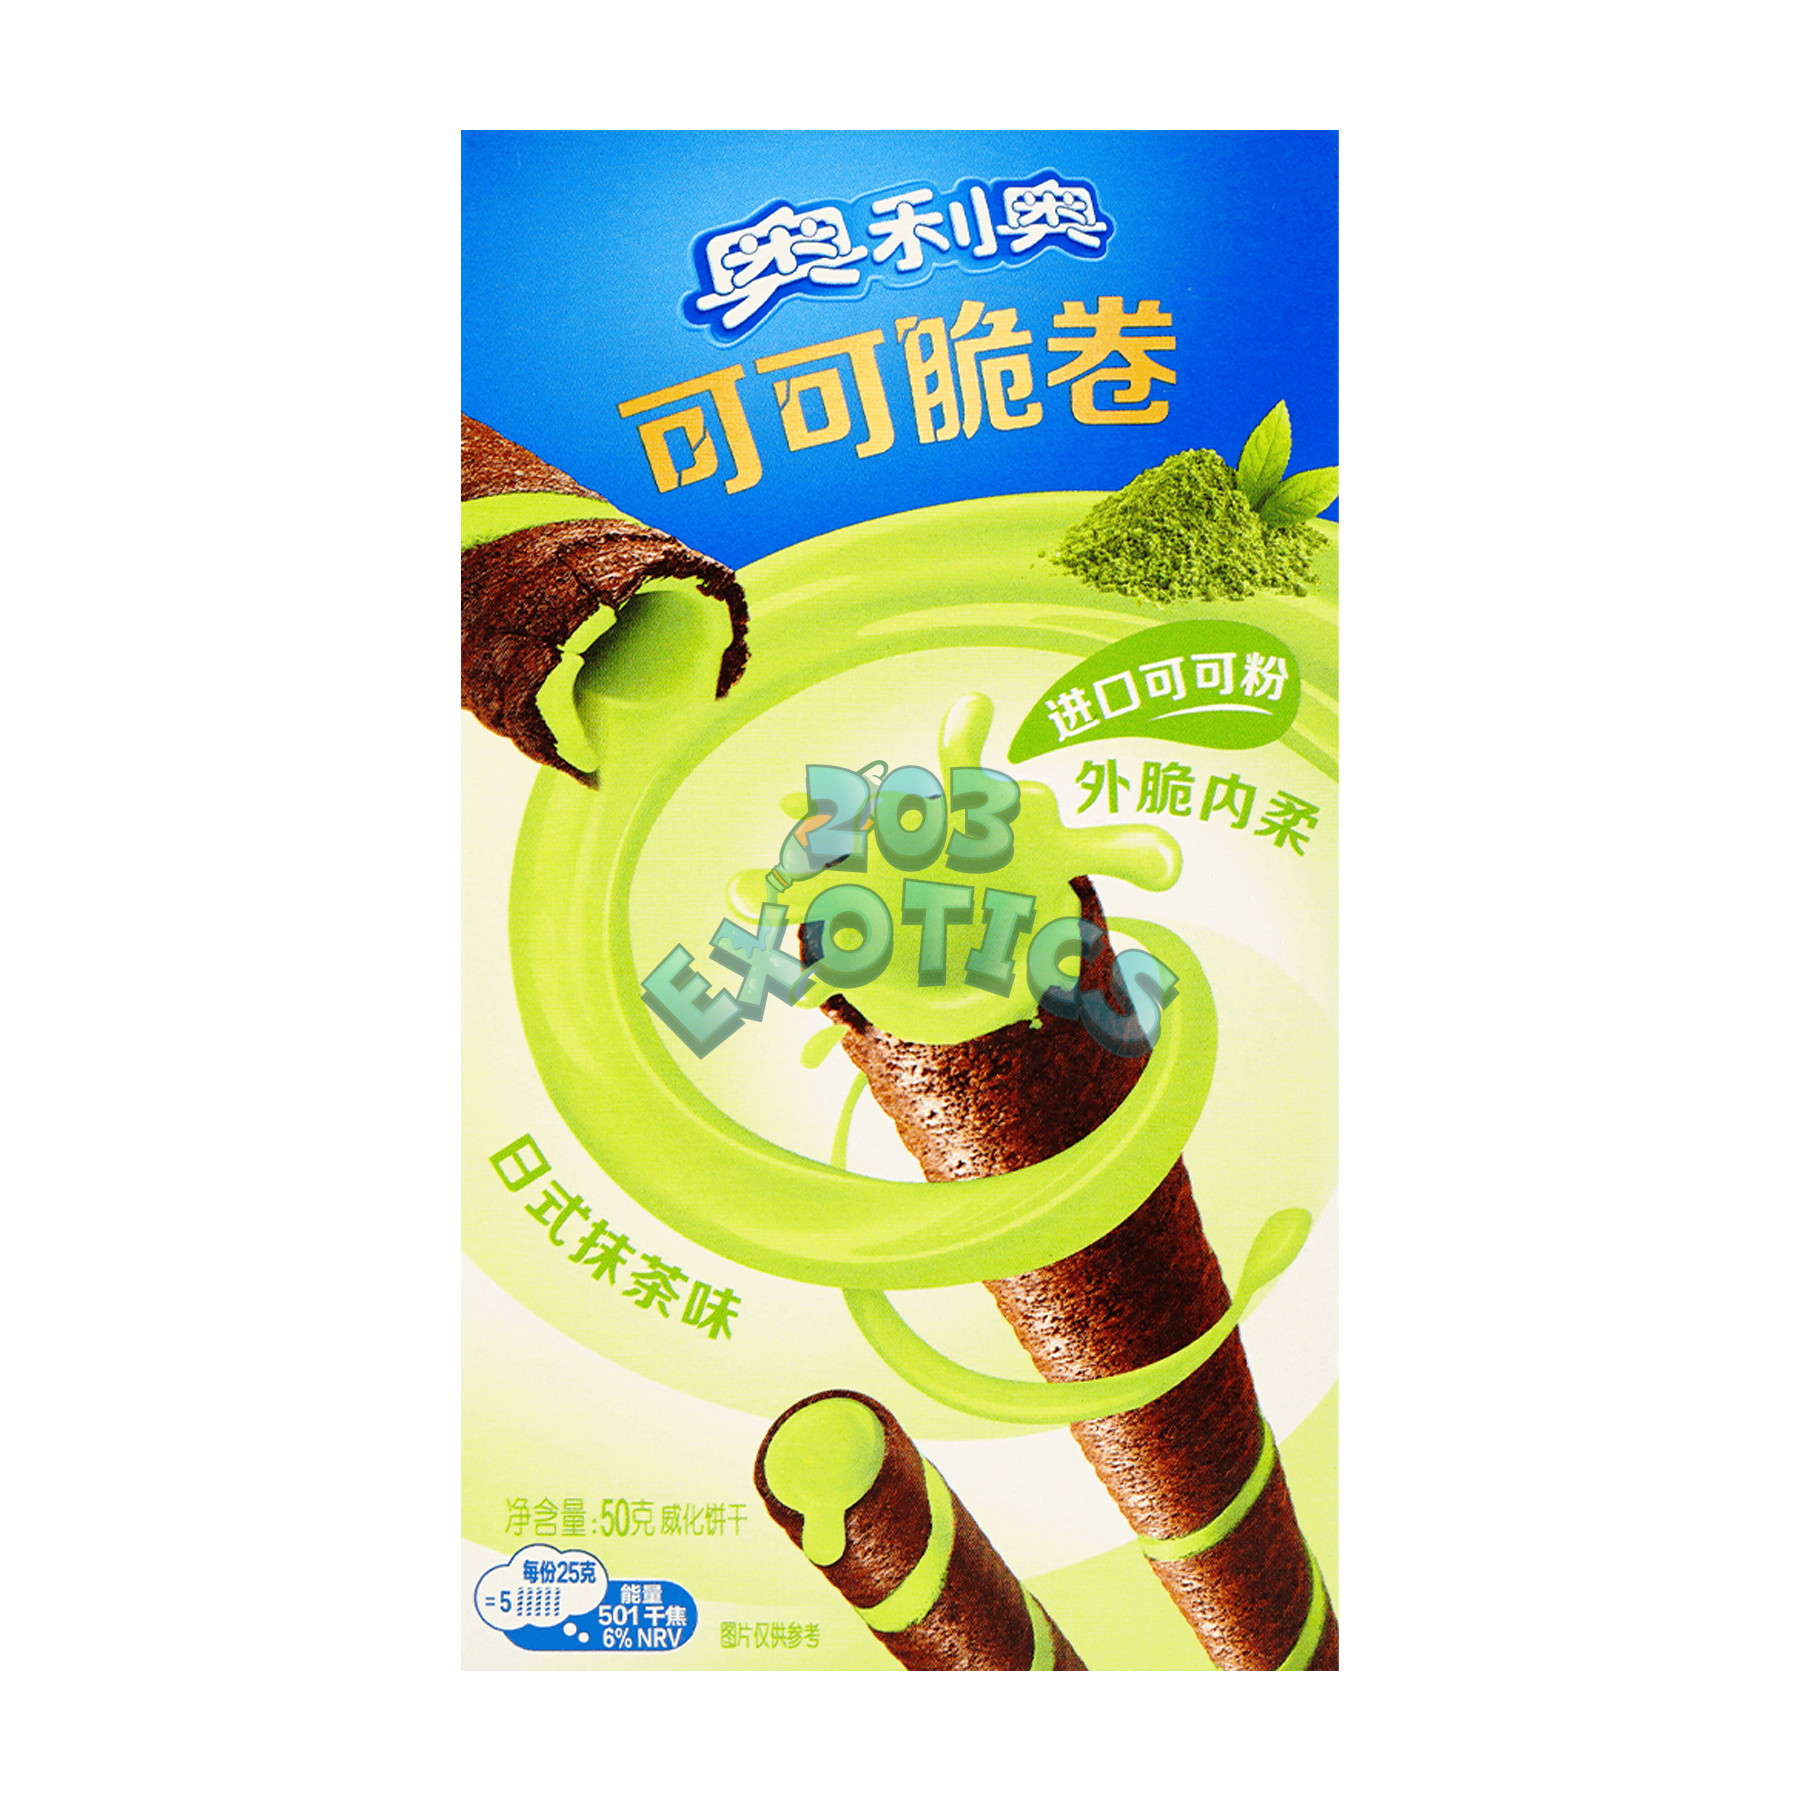 Oreo Cocoa Wafer Roll Matcha Flavor (1.76 Oz)